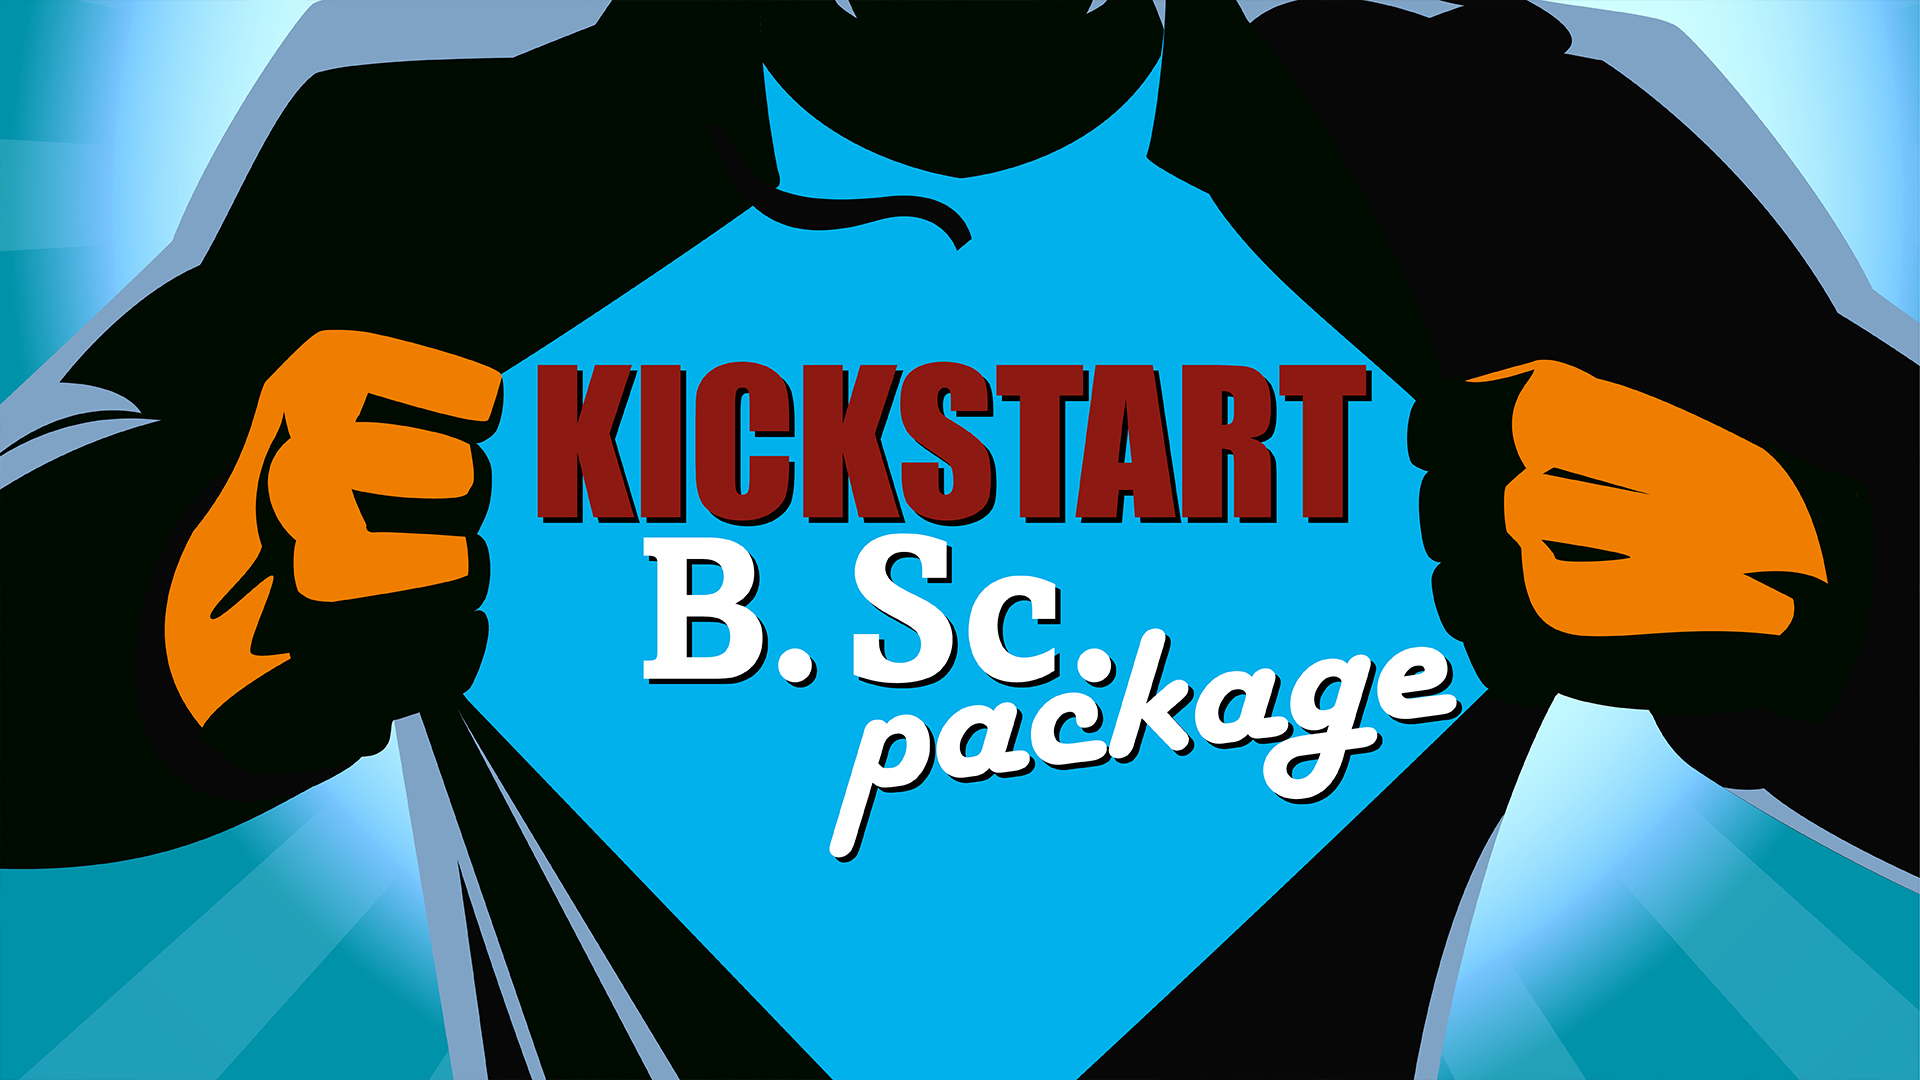 Kickstart B.Sc. Package  Berufsbegleitend studieren als